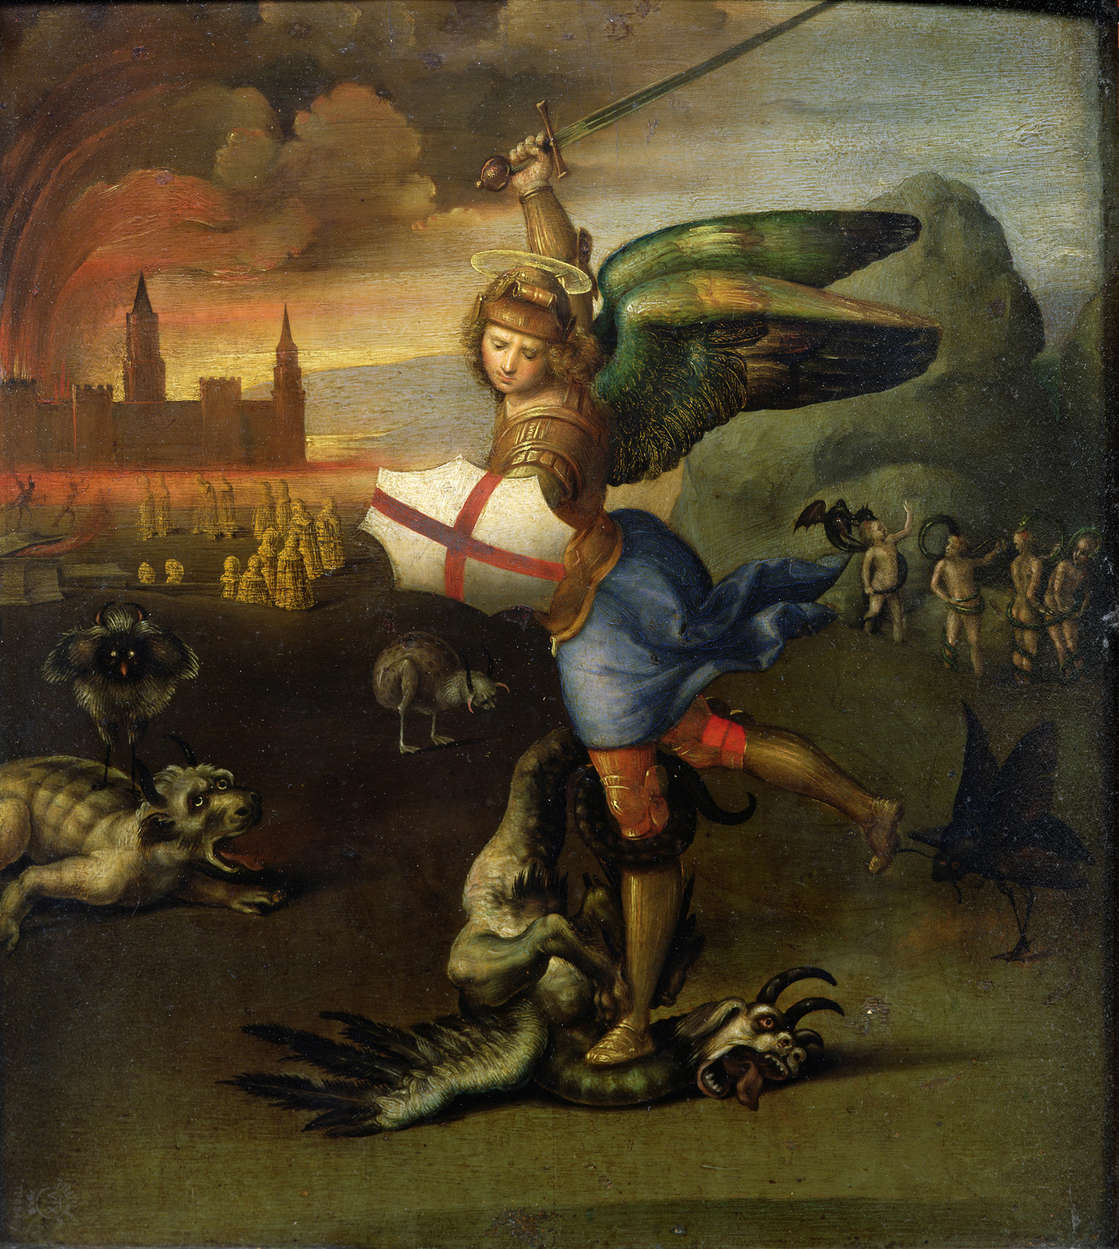             Fototapete "St. Michael" von Raphael
        